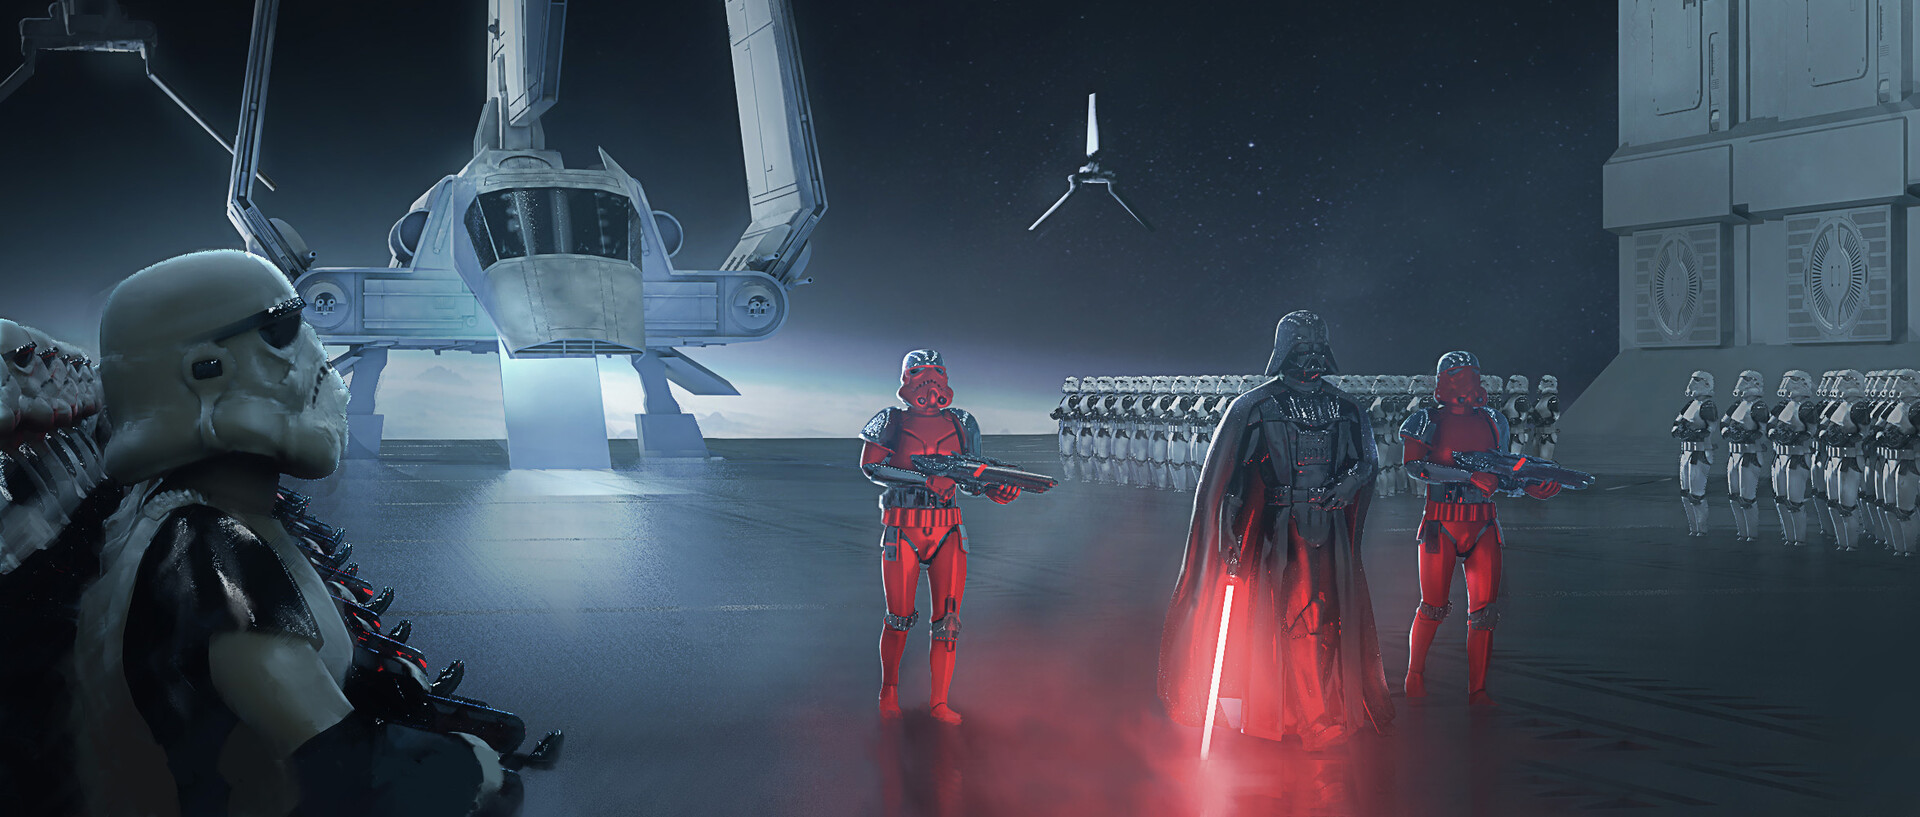 Darth Vader Arrival by Igor Kirdeika